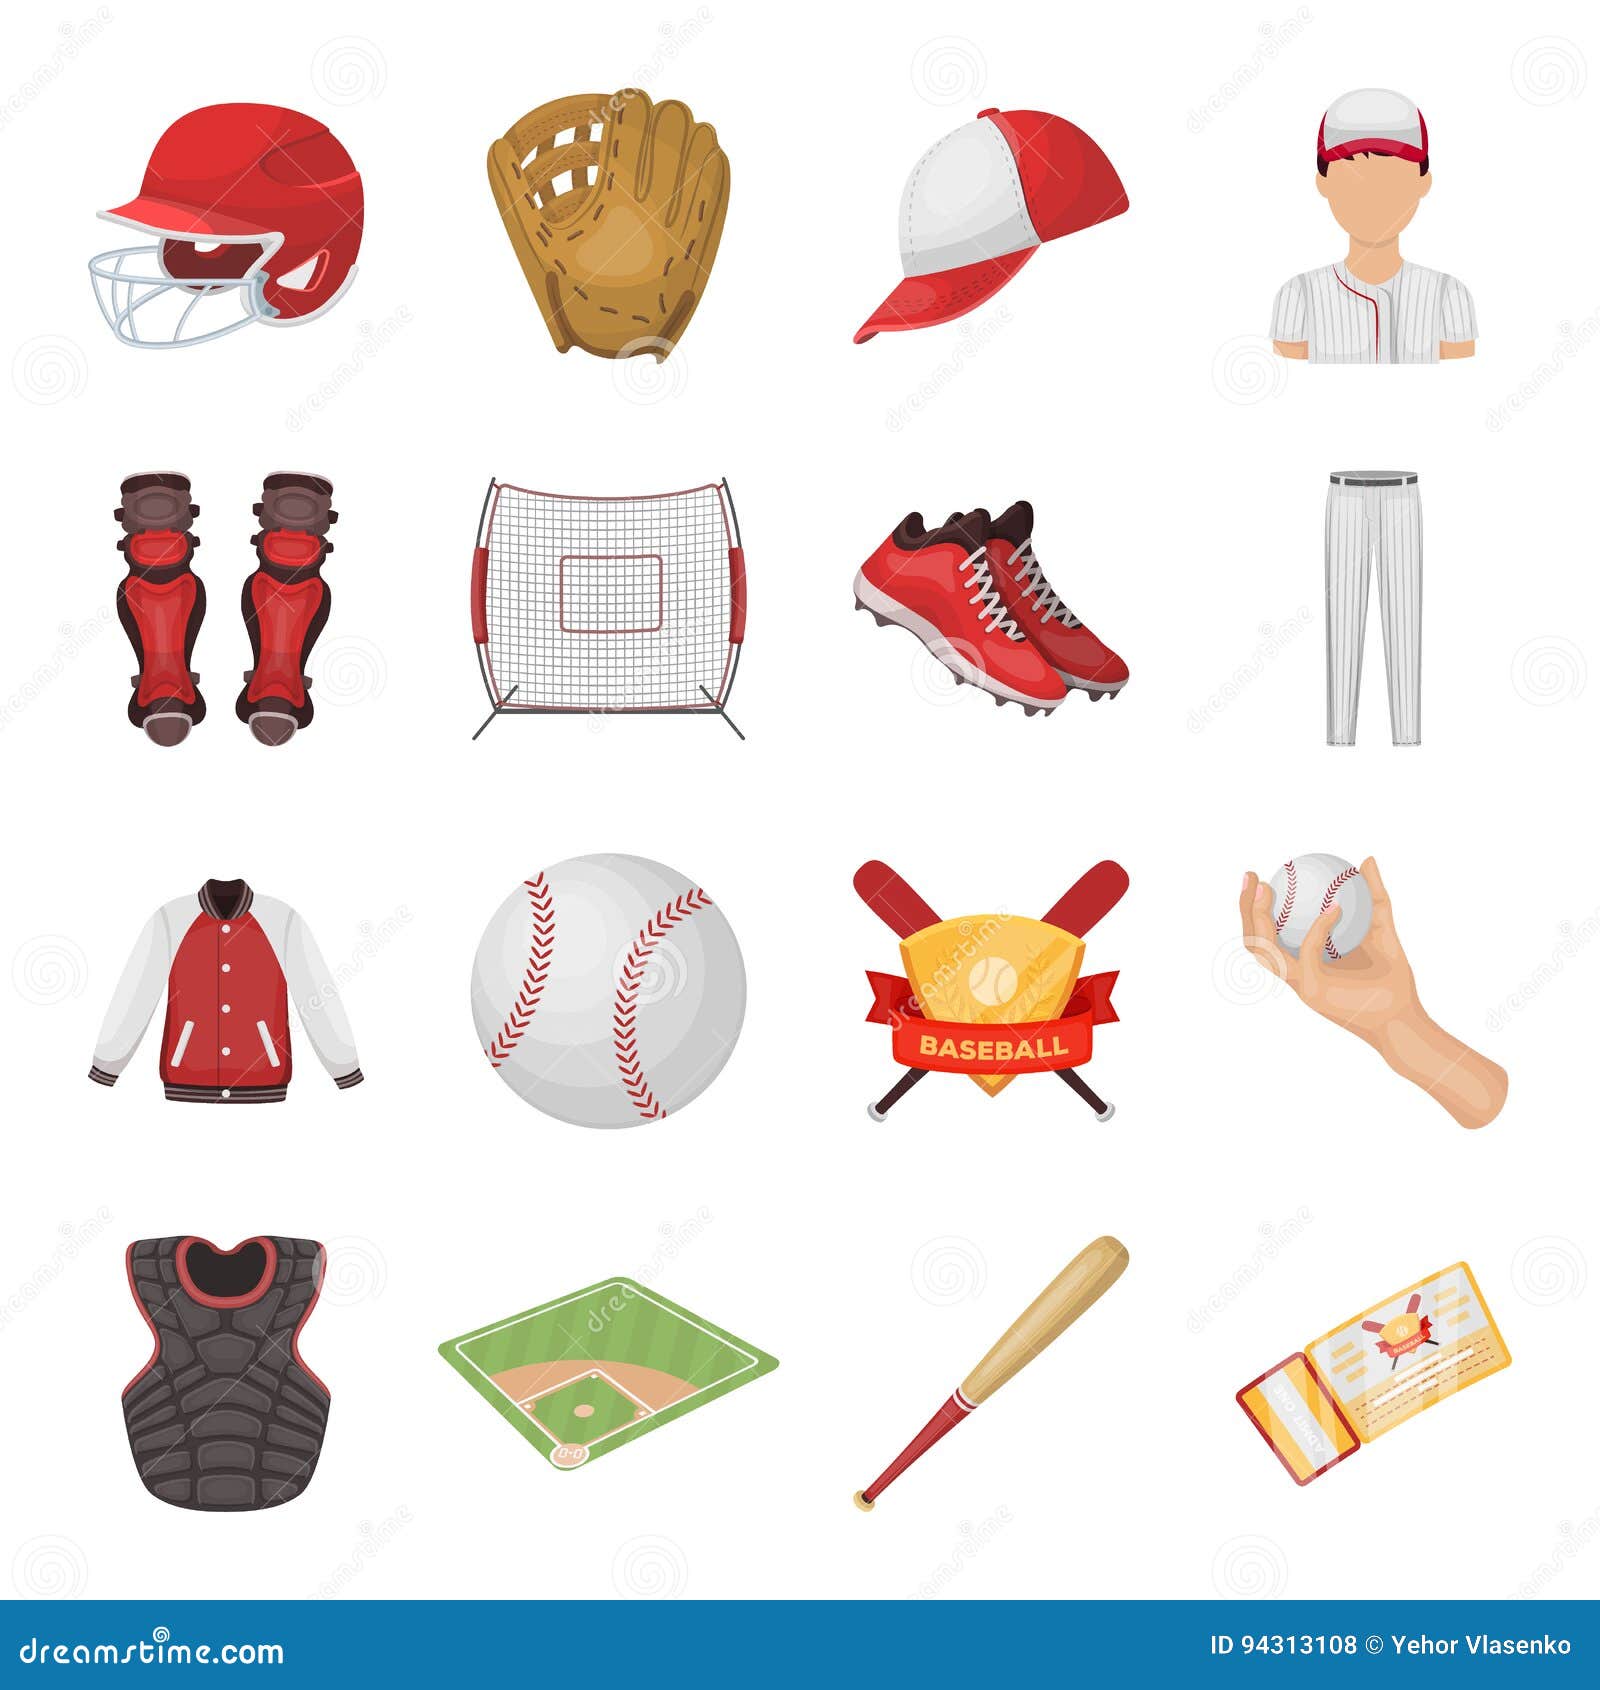 Ball, Helmet, Bat, Uniform and Other Baseball Attributes. Baseball Set ...